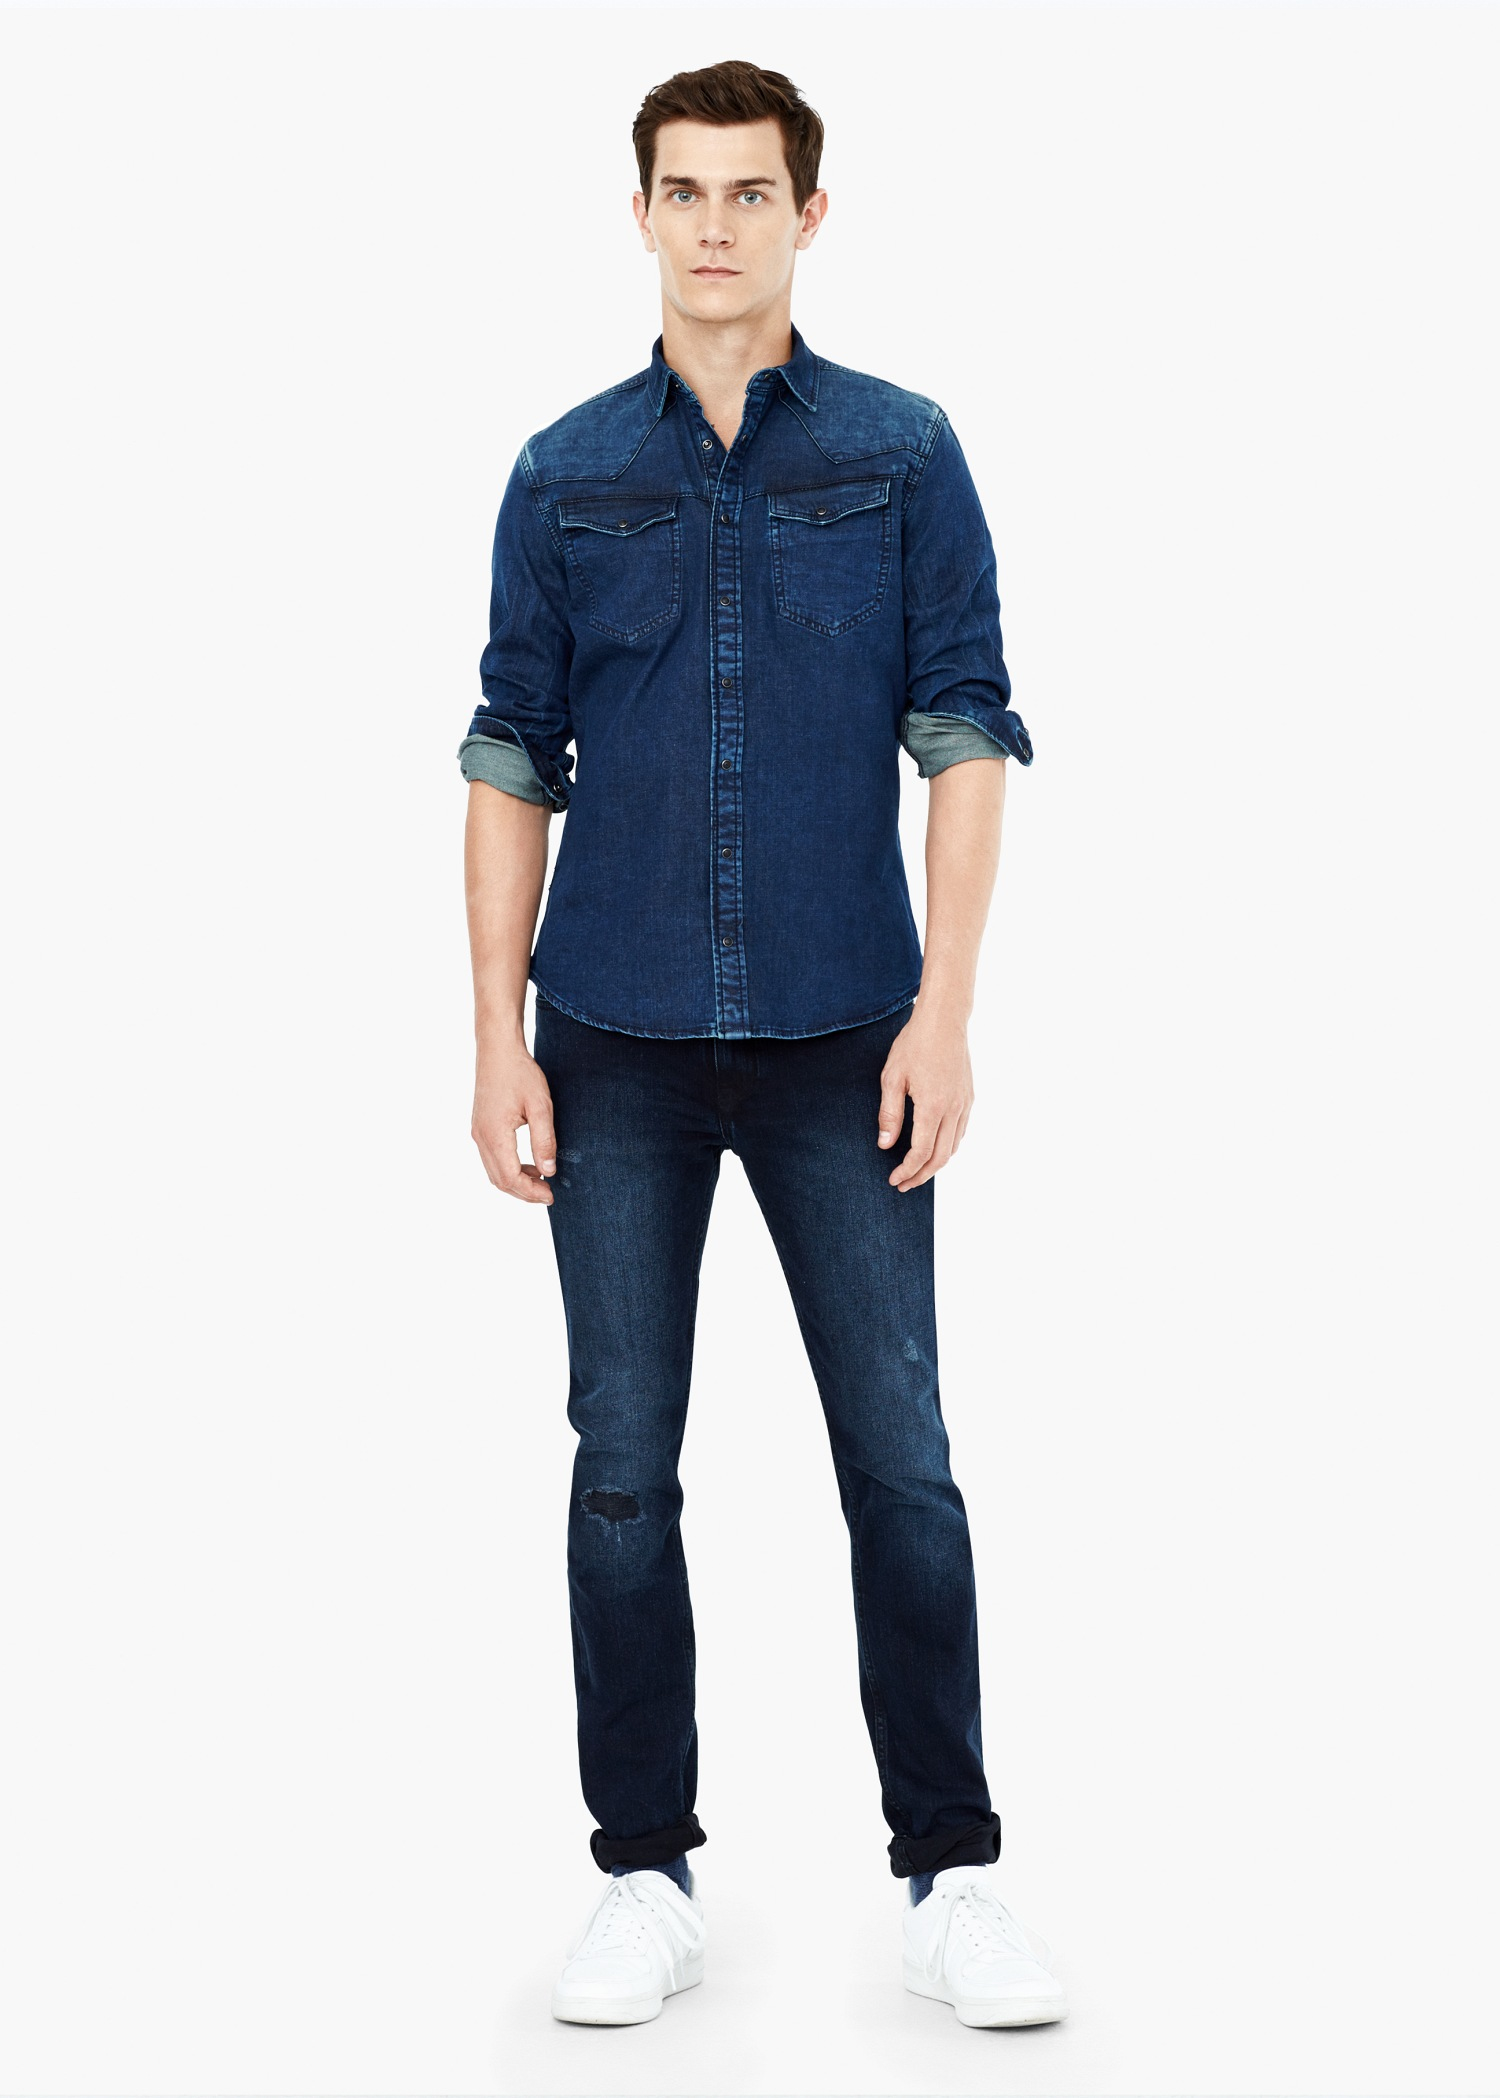 Mango Slim-fit Dark Wash Denim Shirt in Dark Blue (Blue) for Men - Lyst